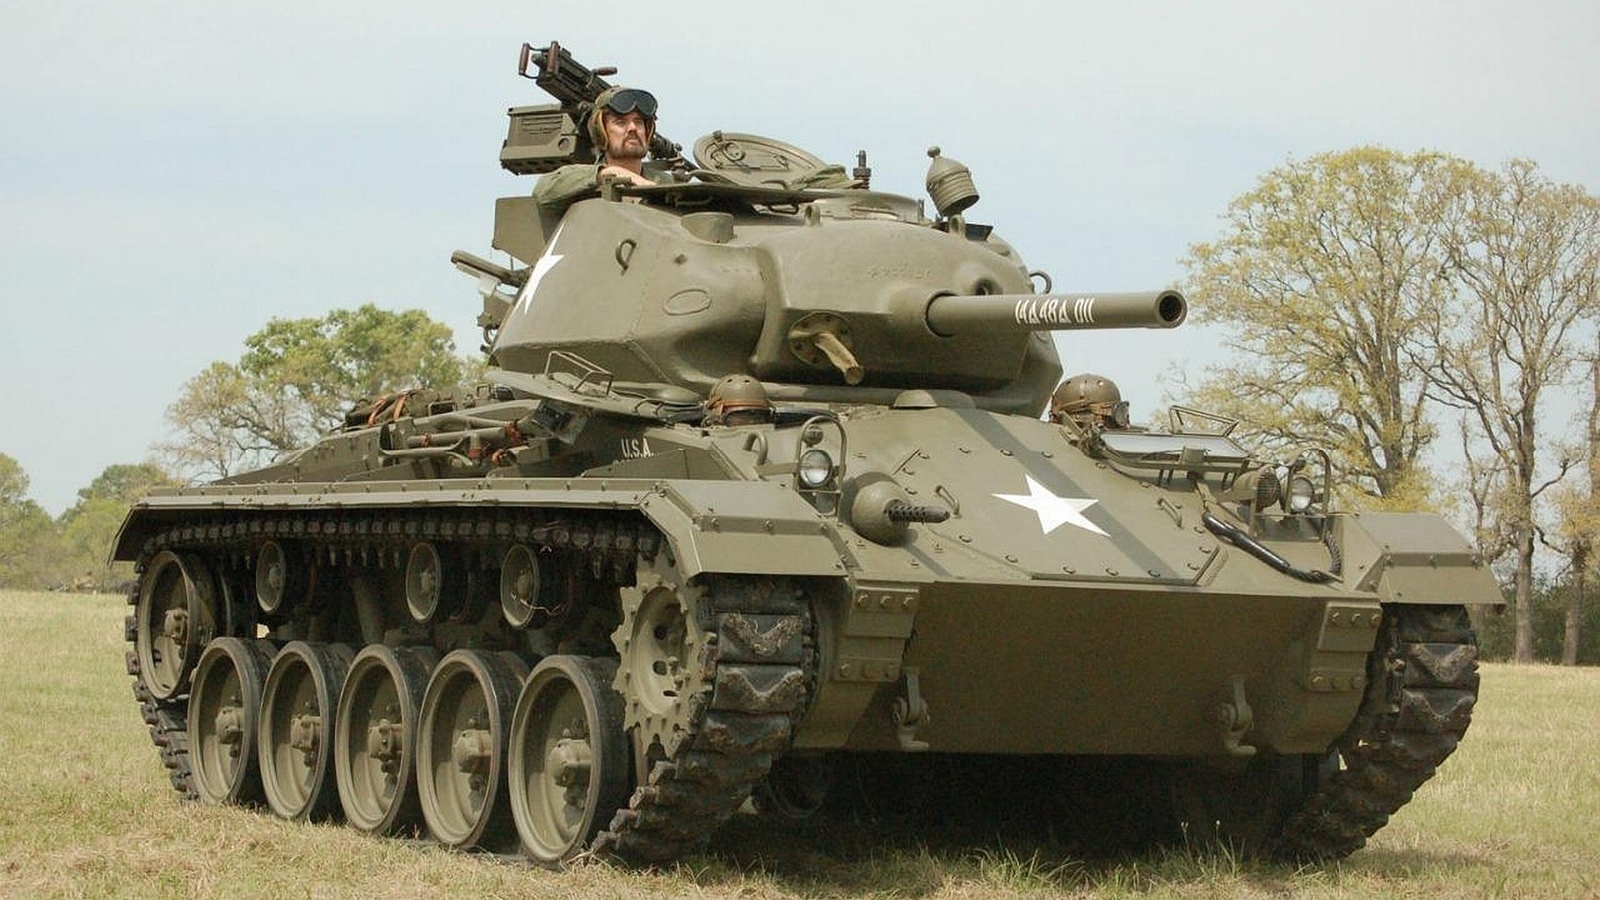 M24, M41, T37, T49, T42, M47, Type 61 - My, Tanks, USA, The Second World War, Technics, Story, Weapon, Longpost